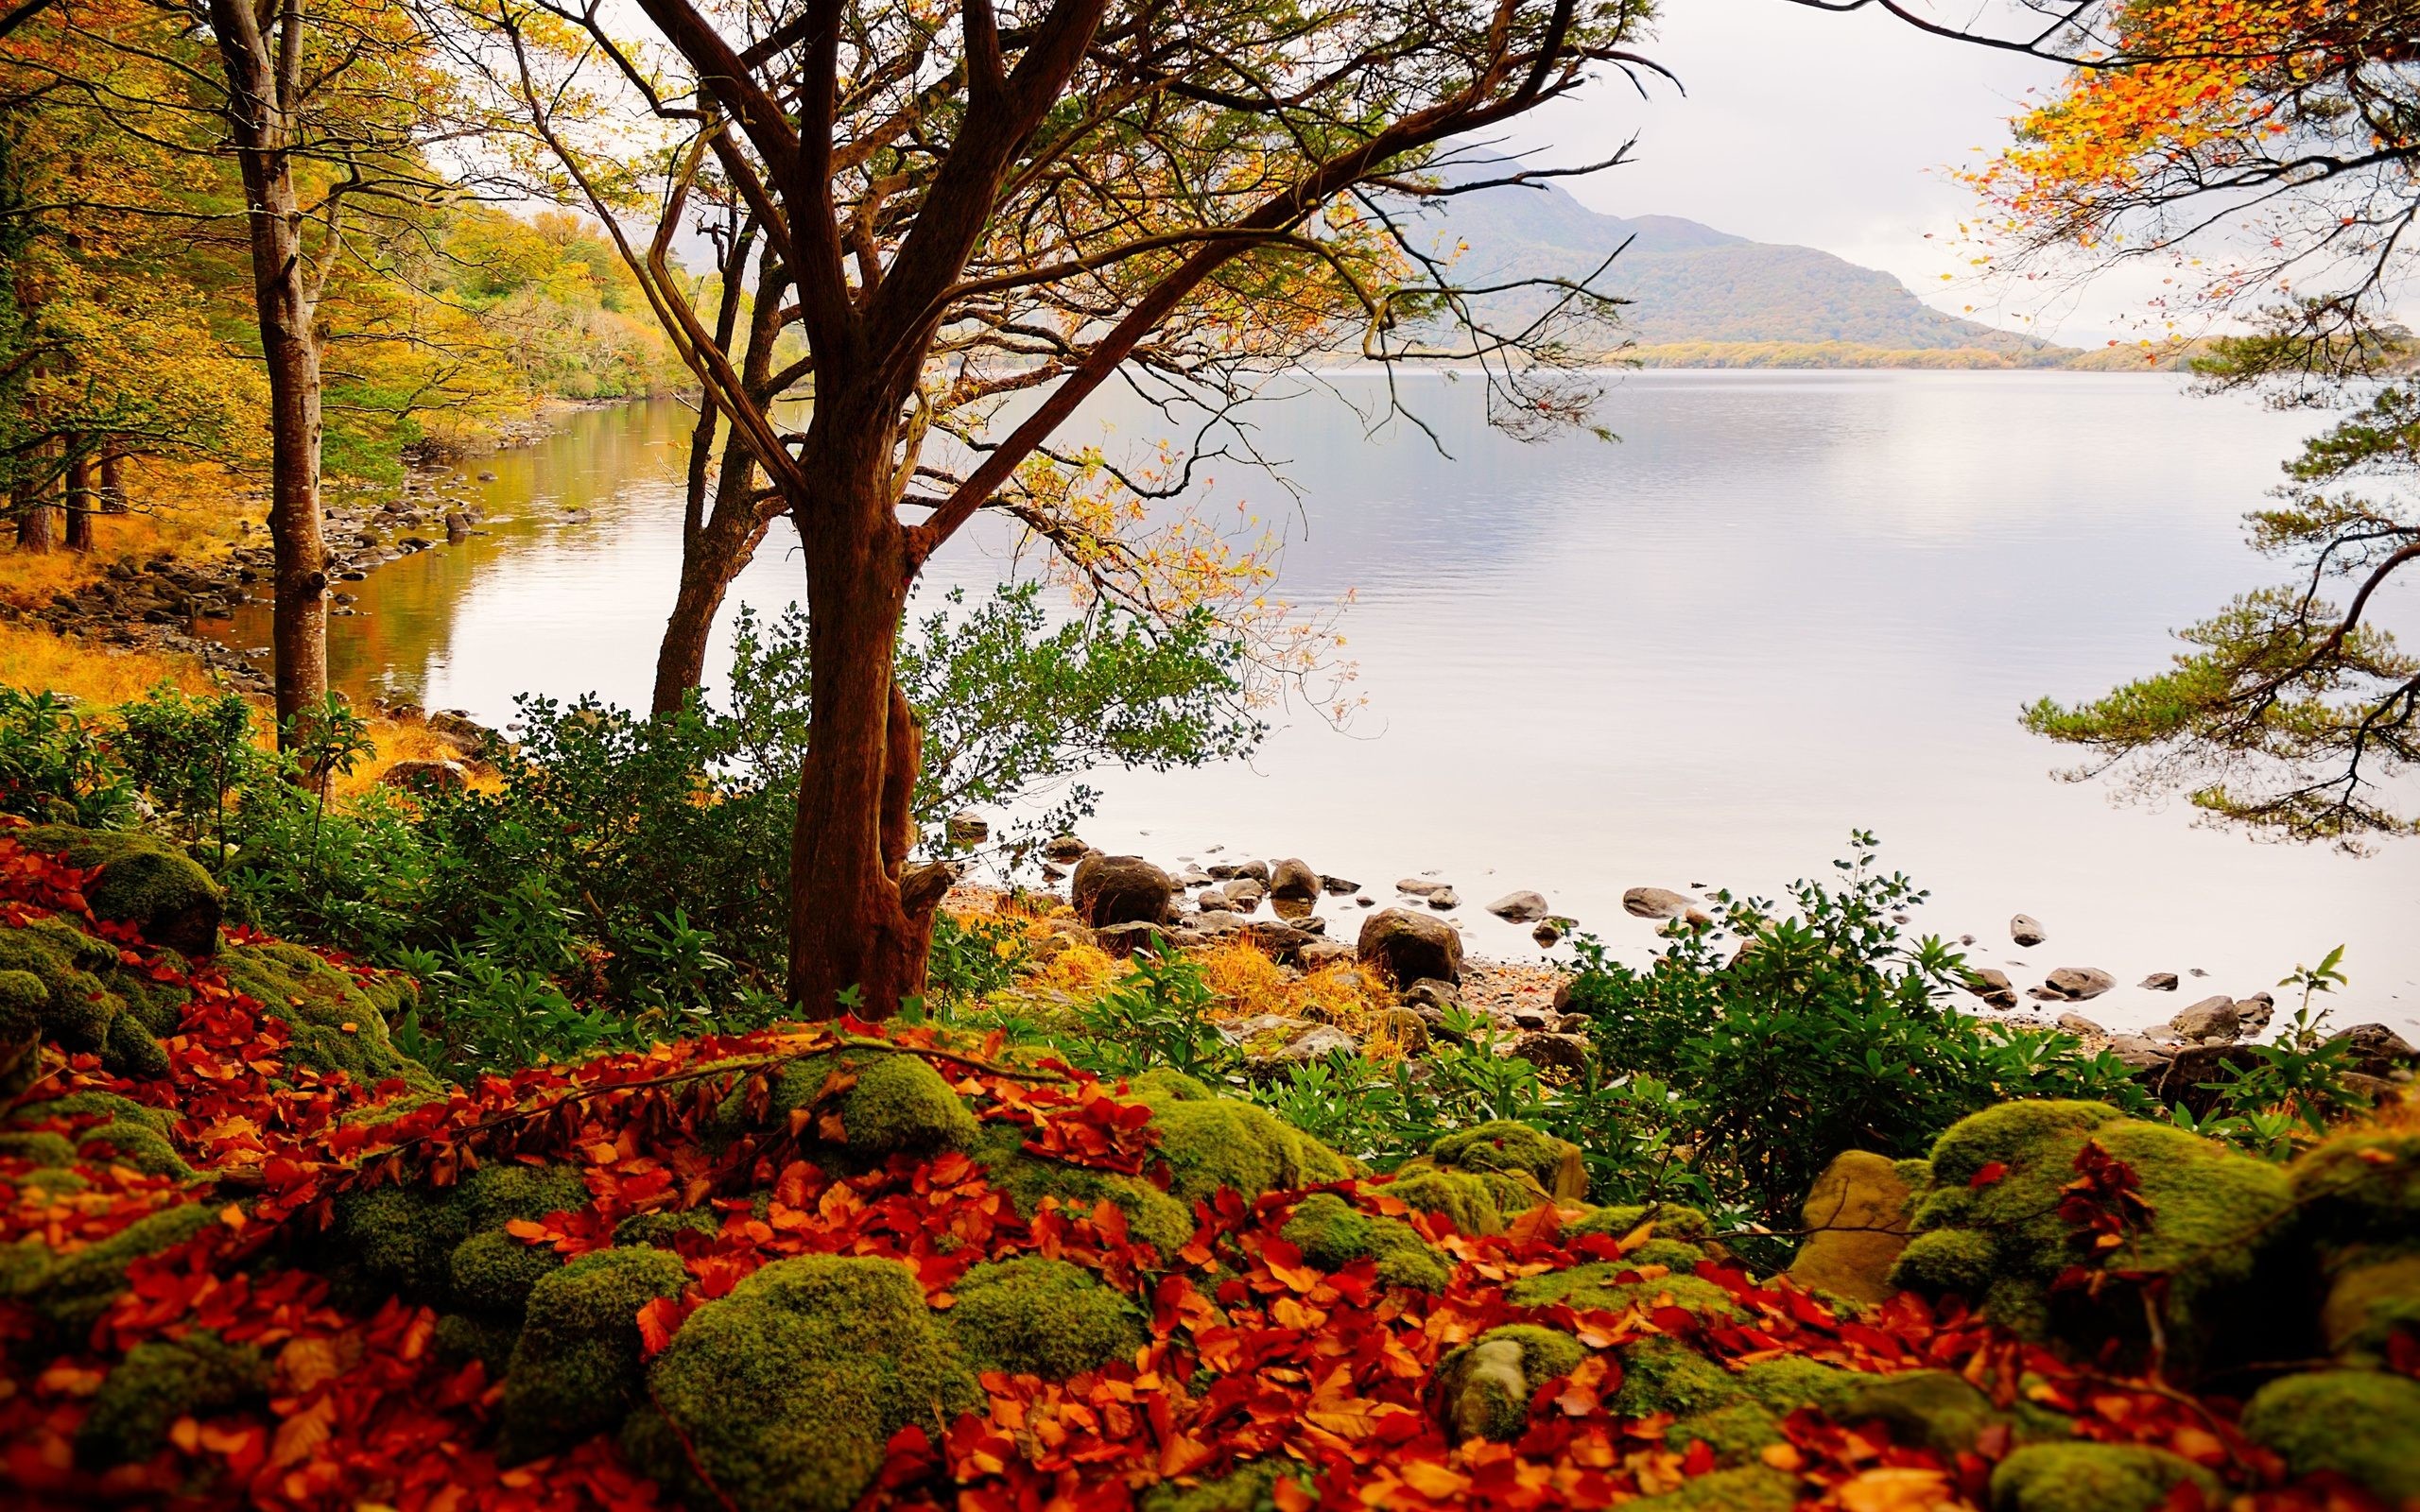 scenery wallpaper hd free download,natural landscape,nature,tree,vegetation,autumn